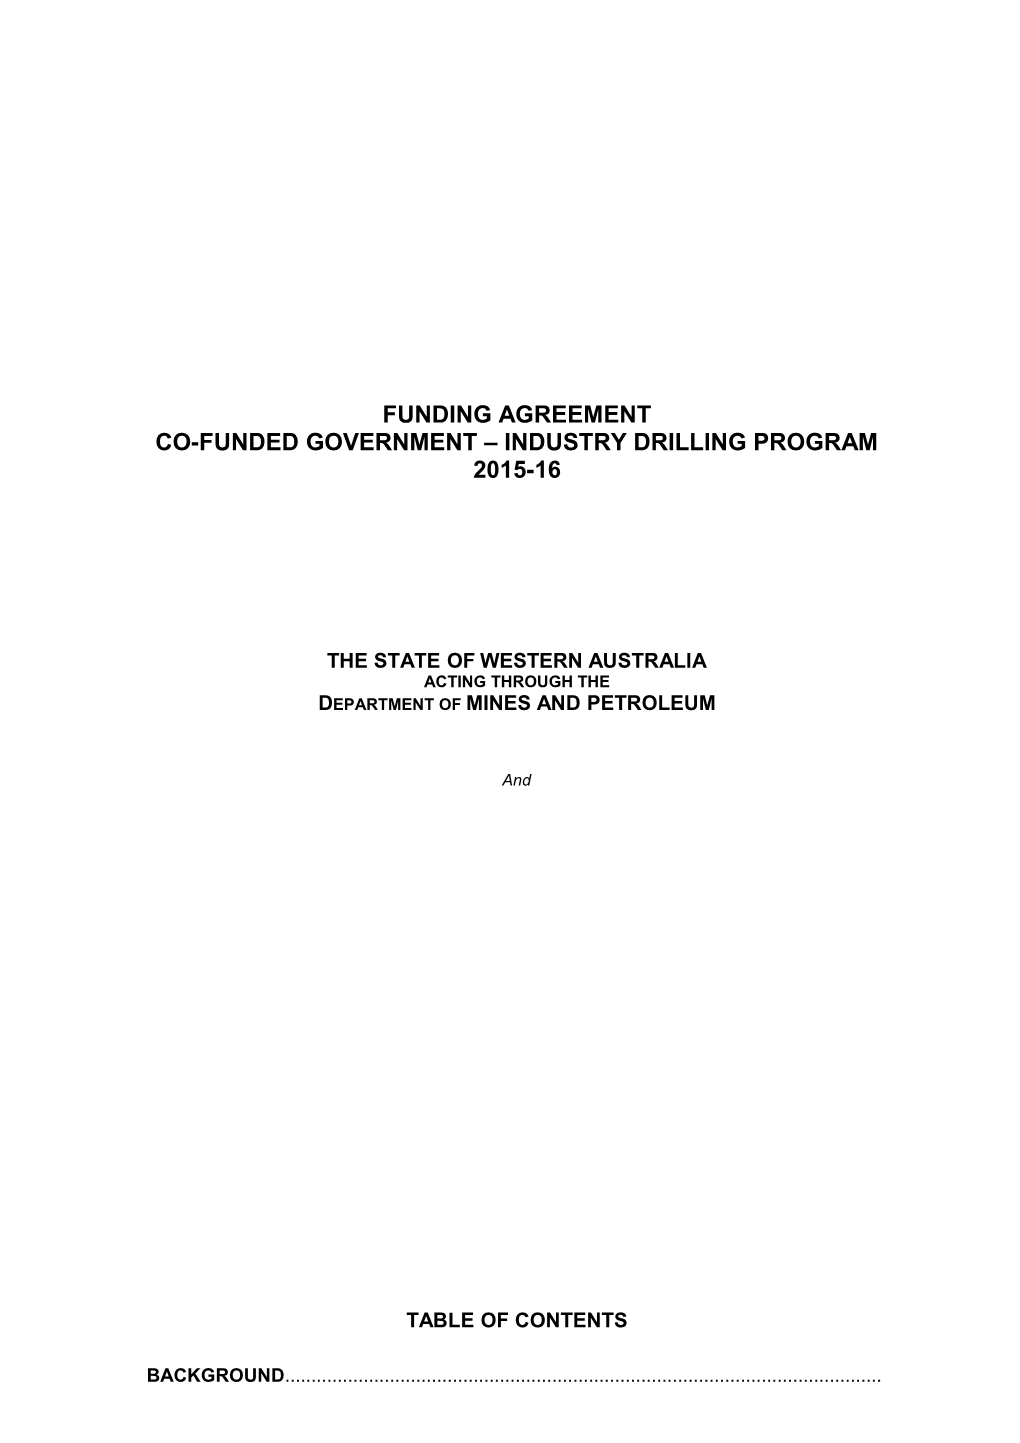 WA Co-Funding Drilling Agreement Proforma Round 5 2012-13